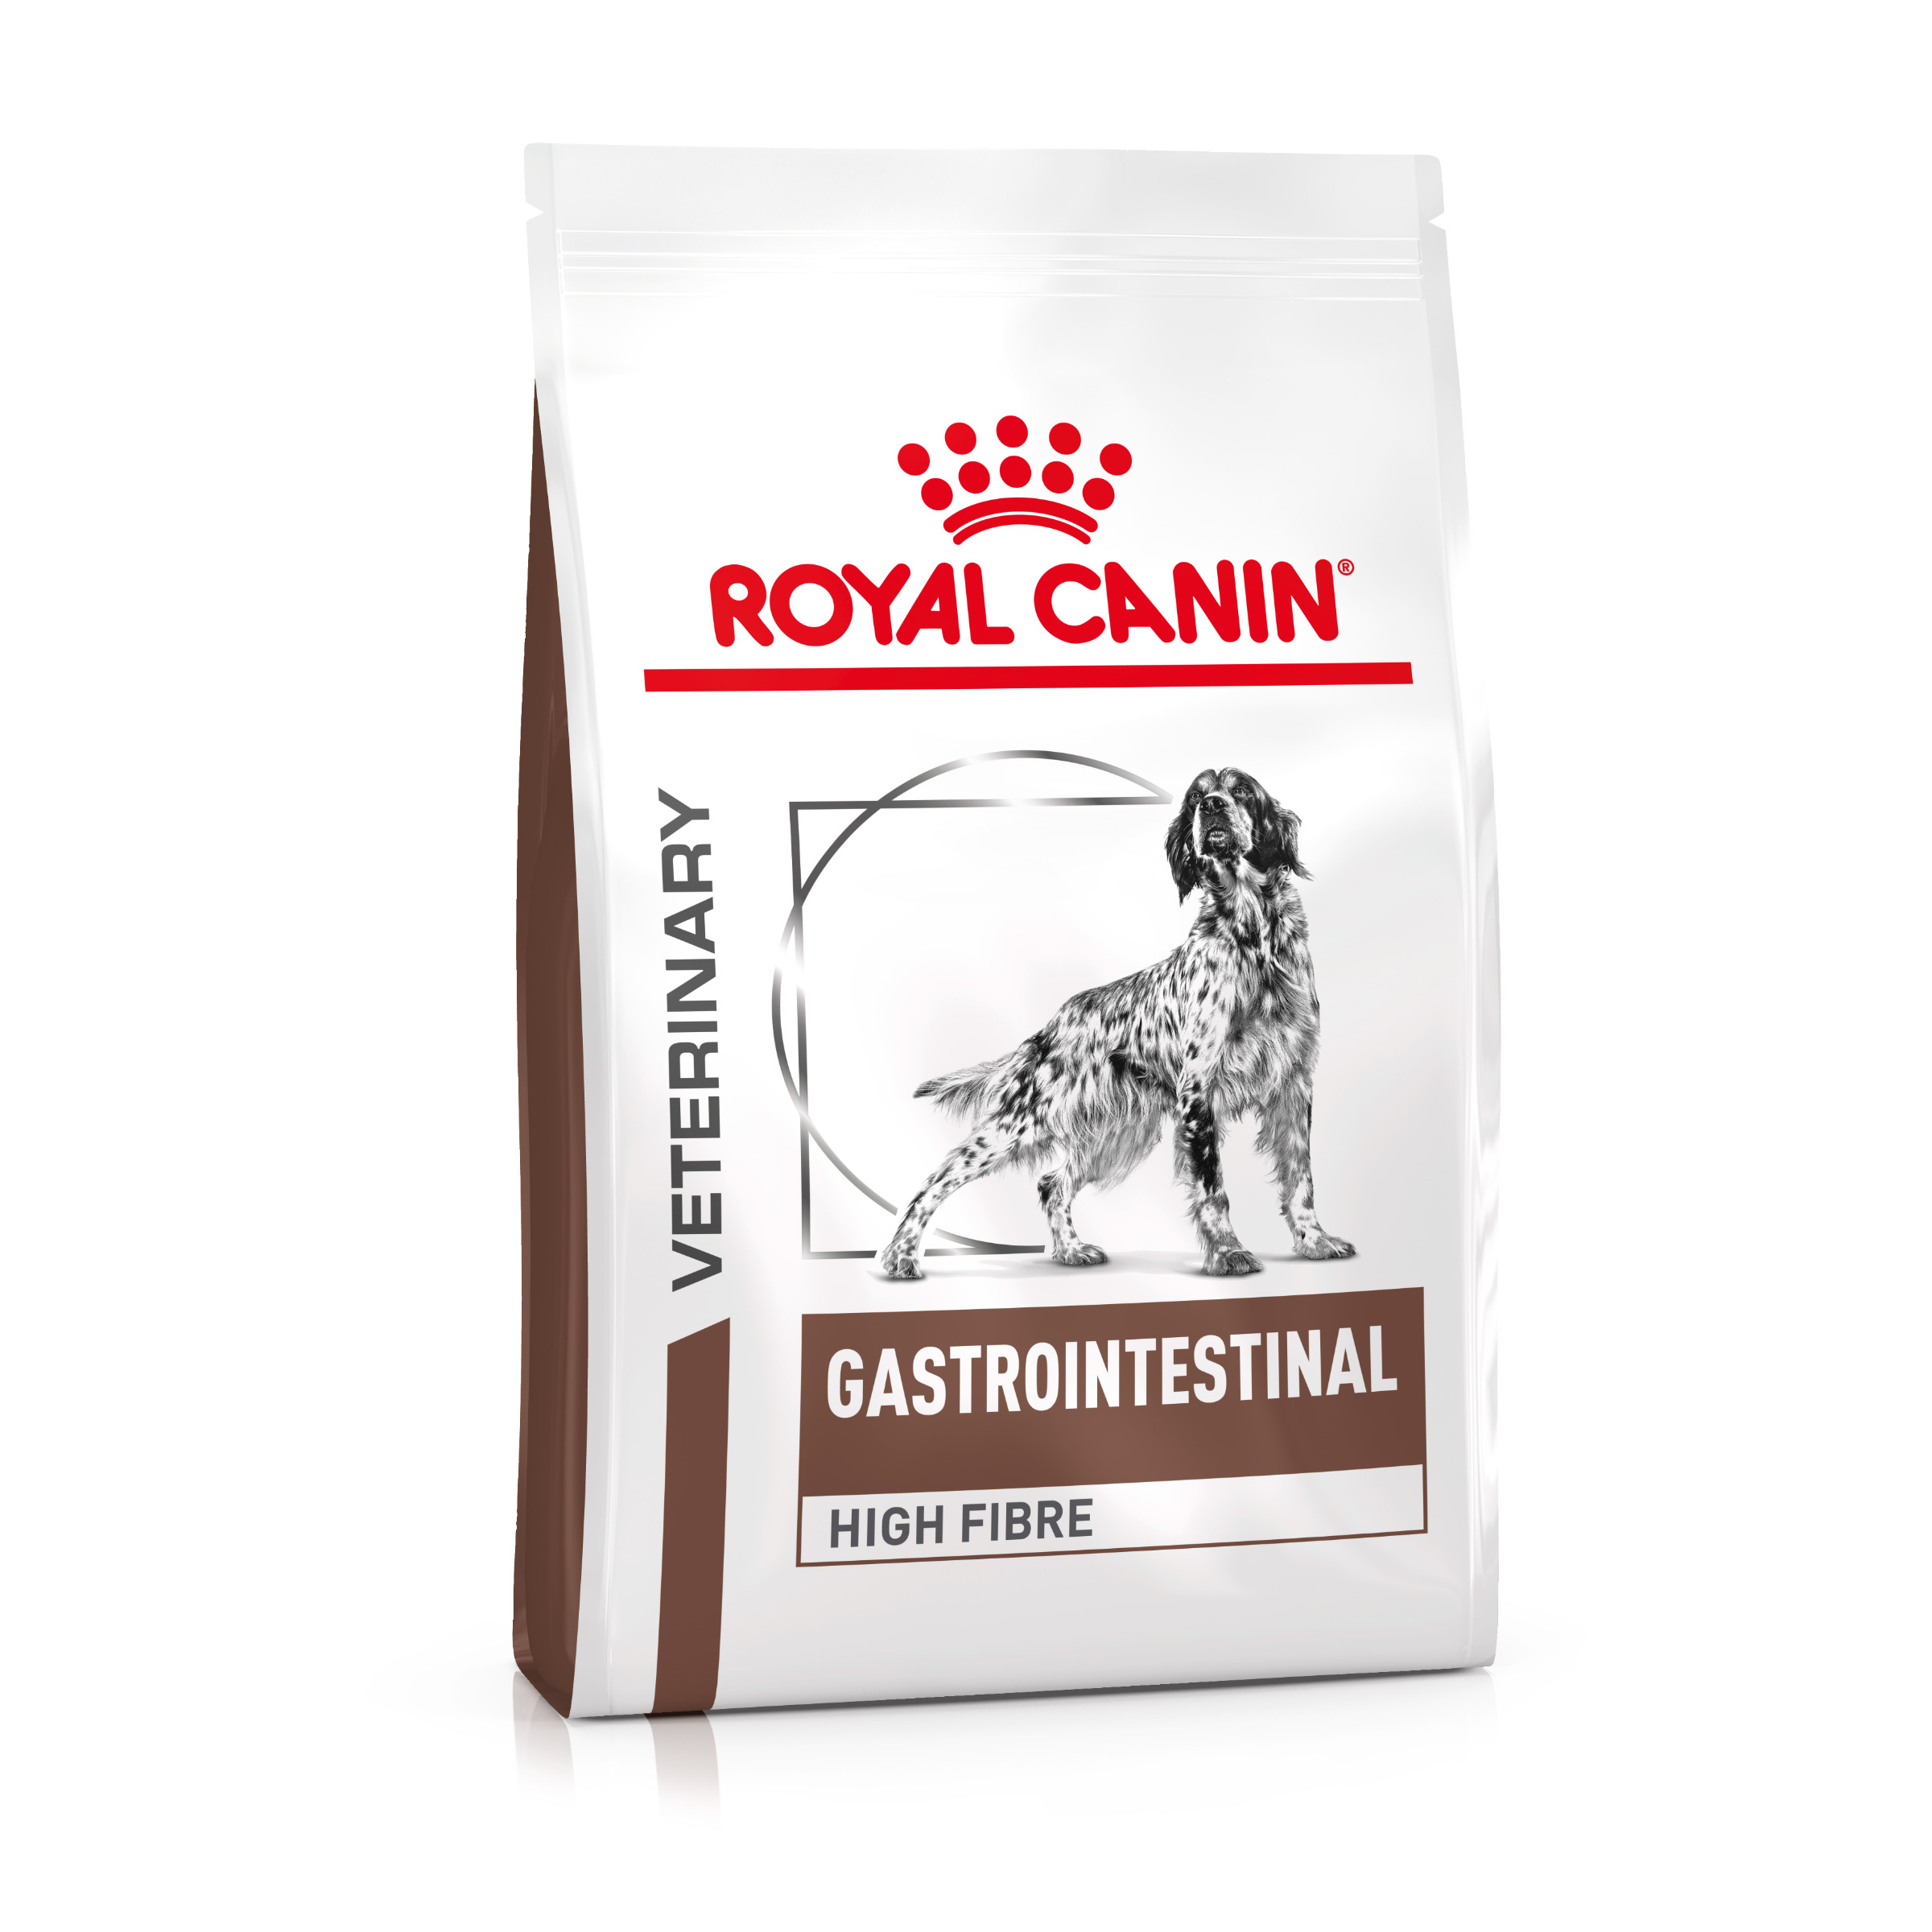 ROYAL CANIN Veterinary GASTROINTESTINAL HIGH FIBRE Trockenfutter für Hunde 2 kg (Hund)